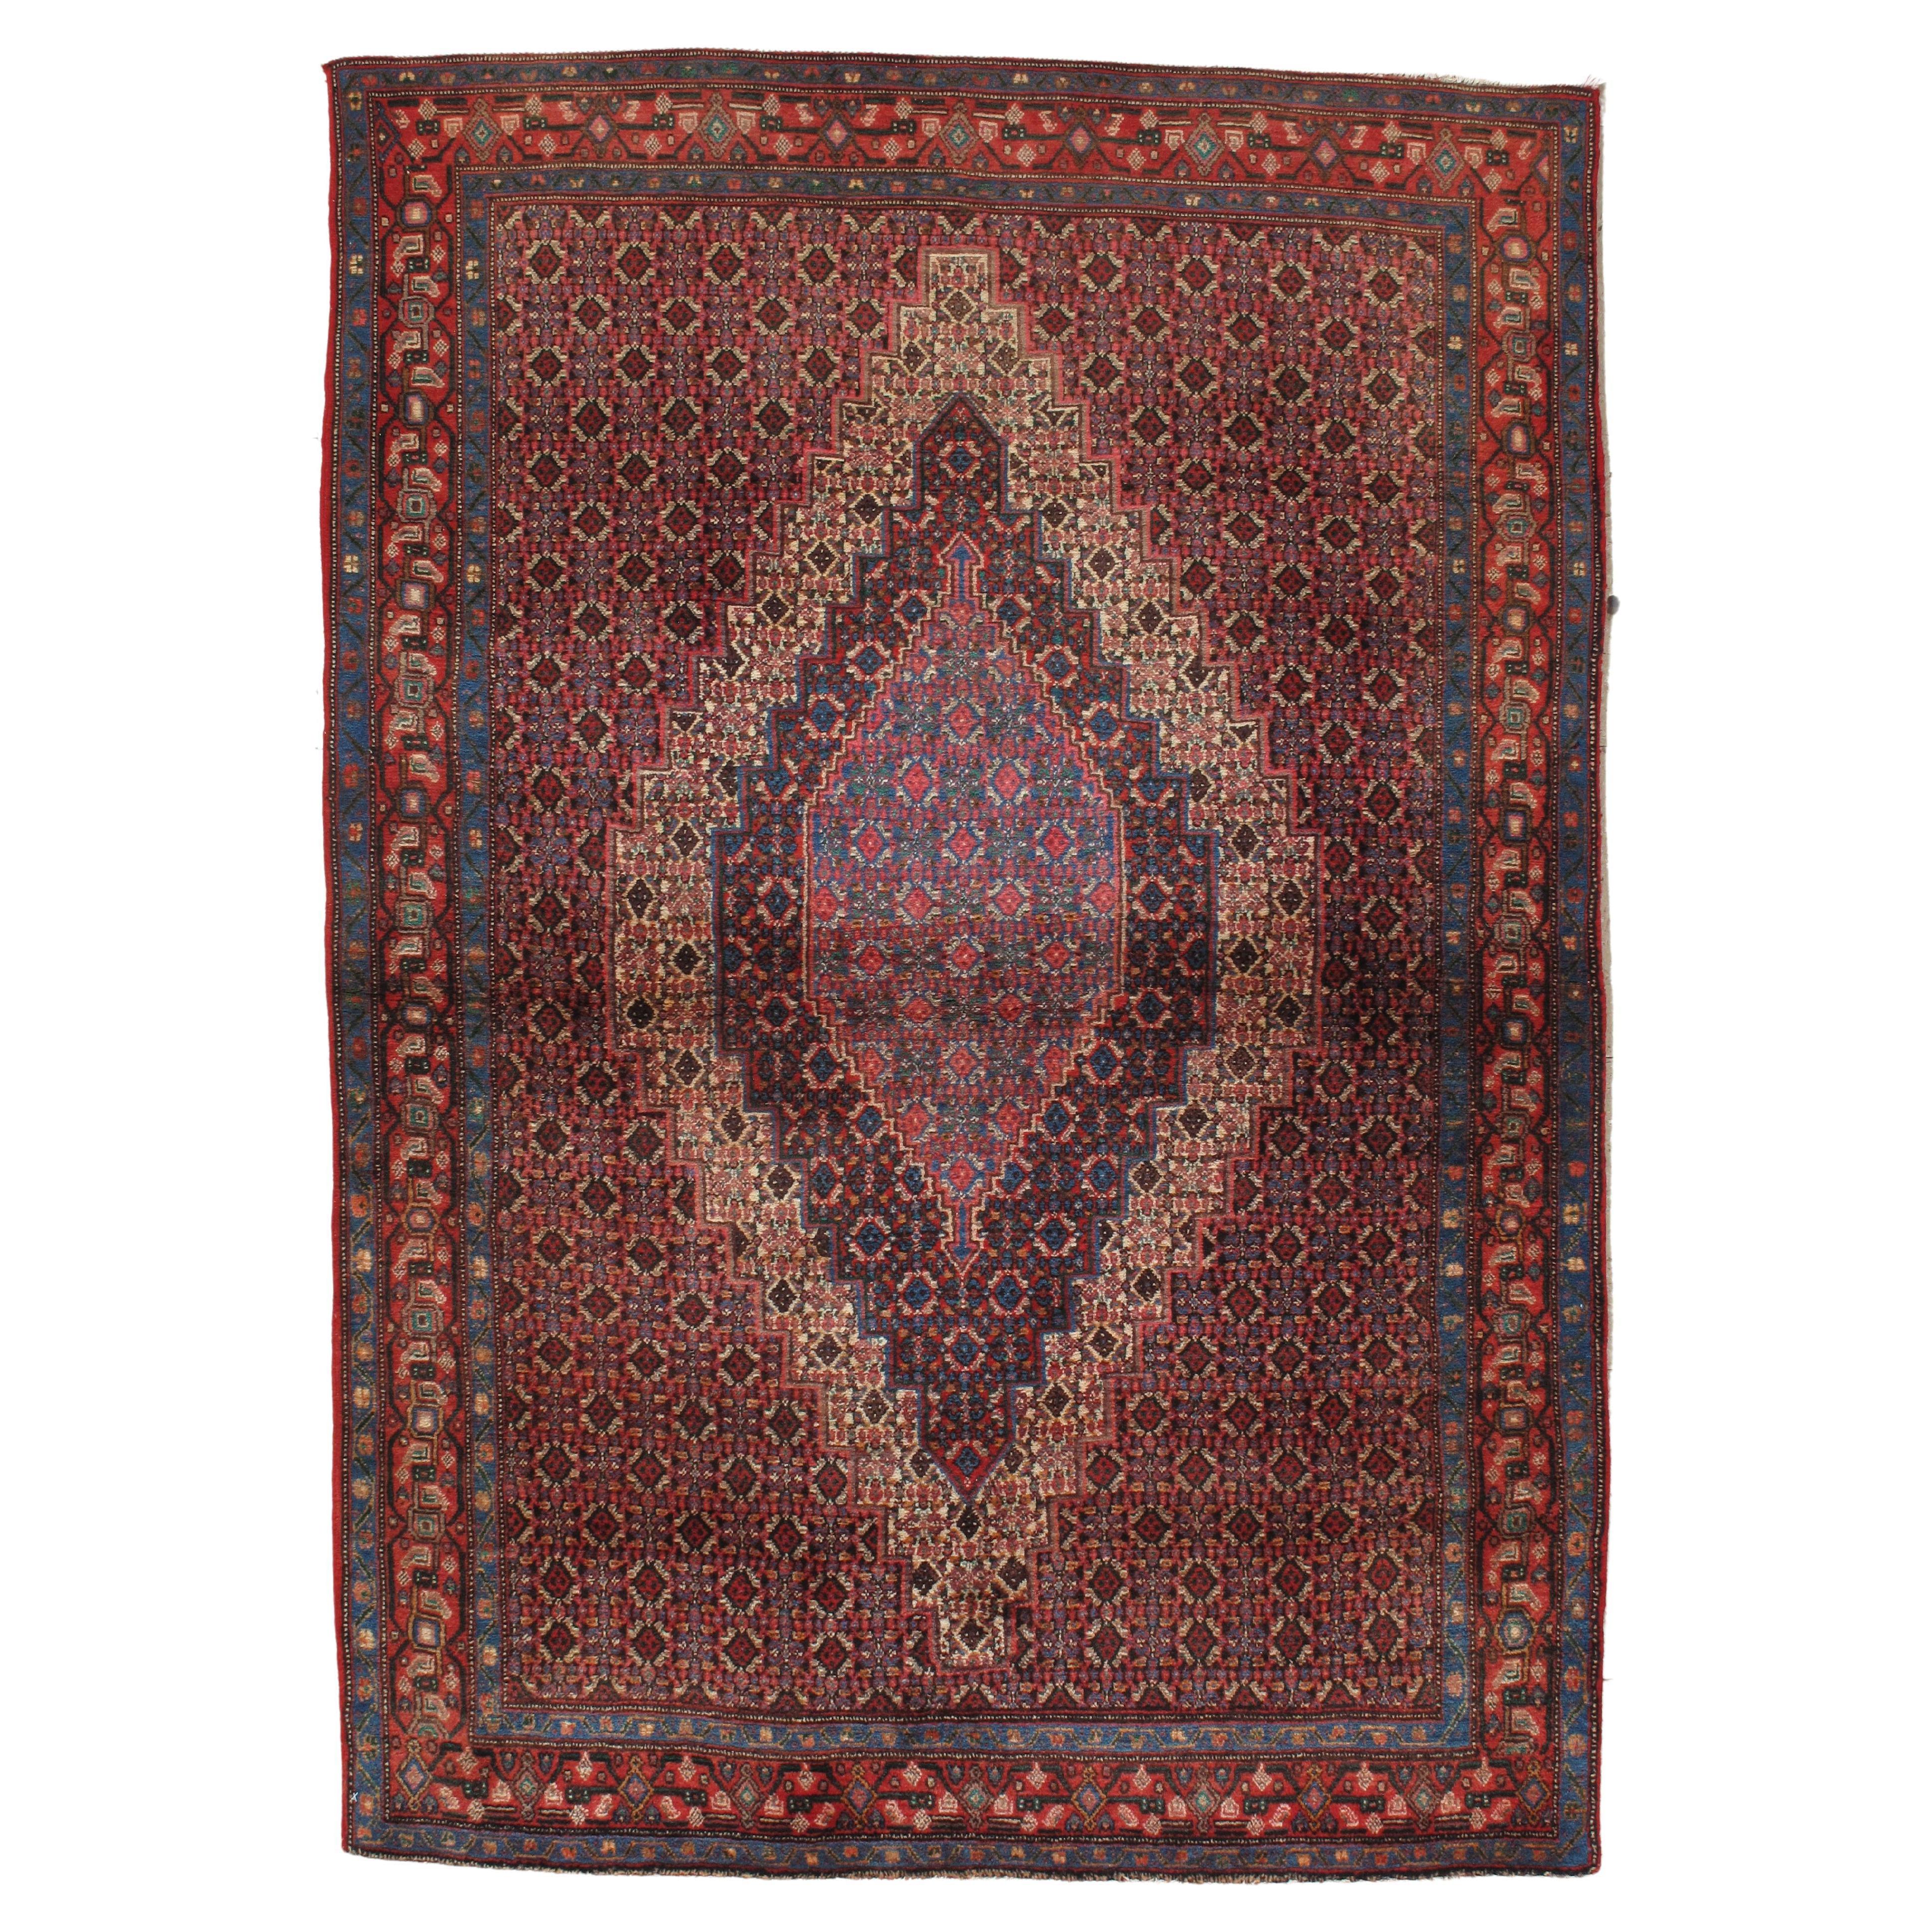 Antique Persian Tabriz Carpet, Wine Red, Ivory, Navy, Handmade Oriental Rug For Sale